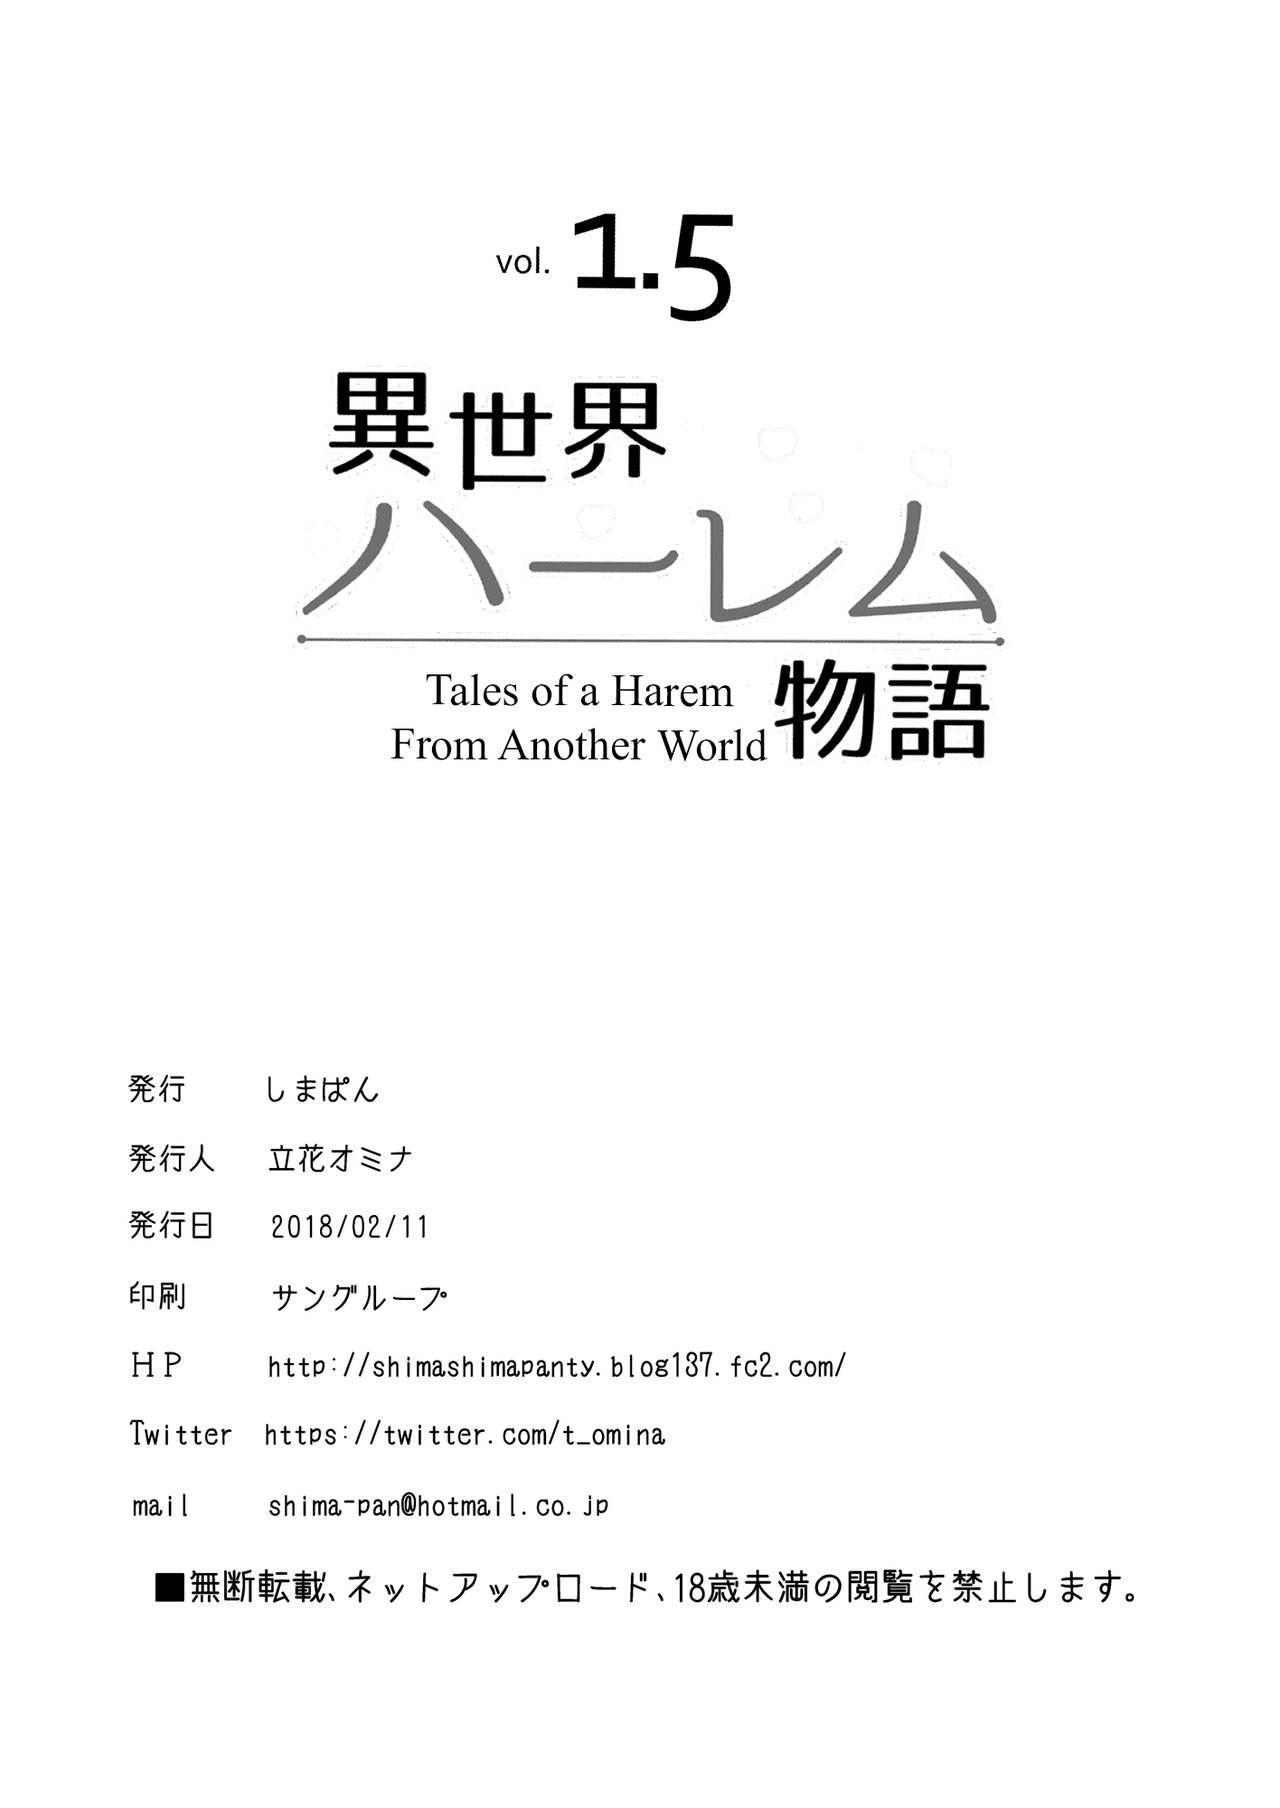 Isekai Harem Monogatari - Tales of Harem Vol. 1.5｜Tales of a Harem from Another World Vol. 1.5 7